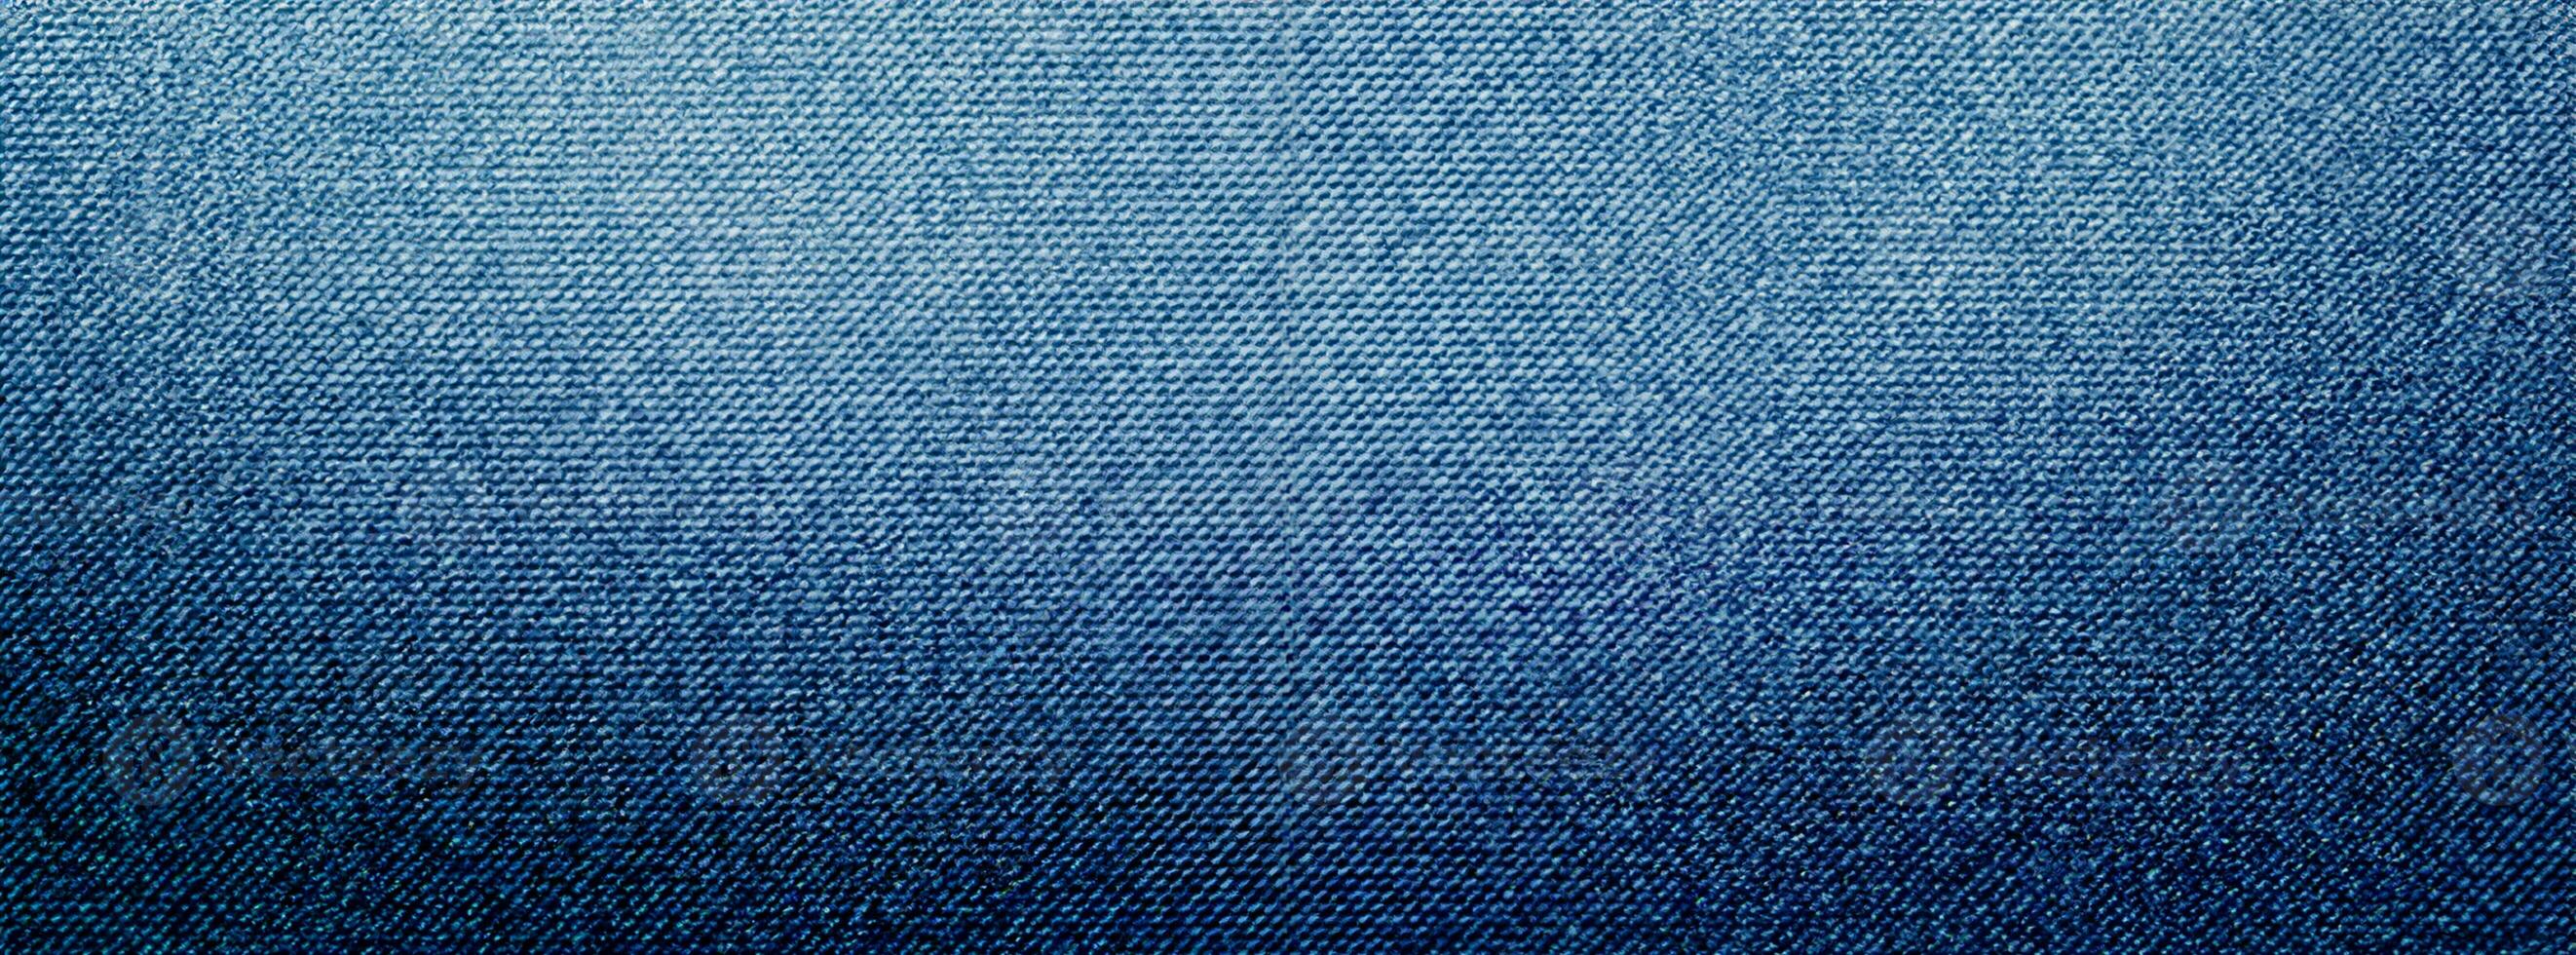 Blue Denim Textile background Illustration photo